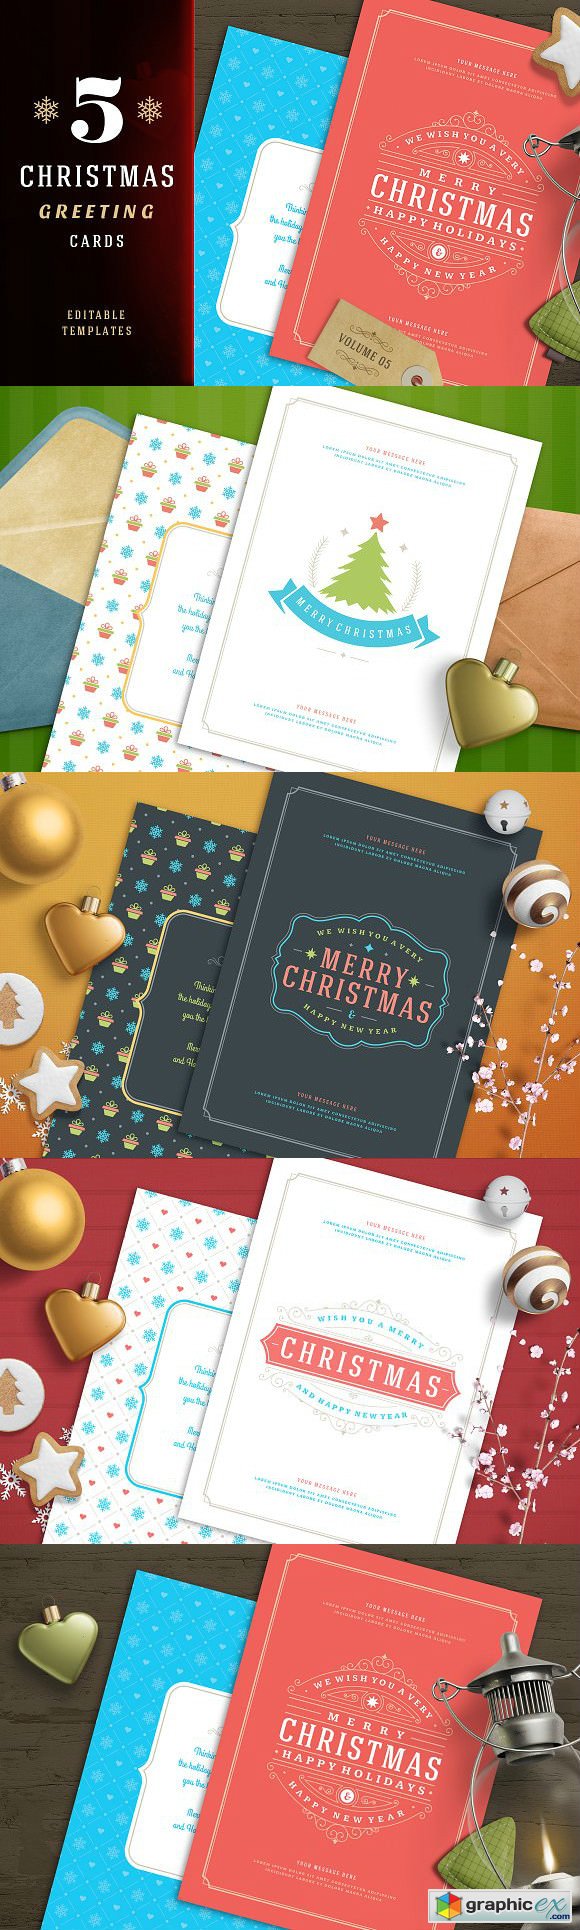 5 Christmas greeting cards